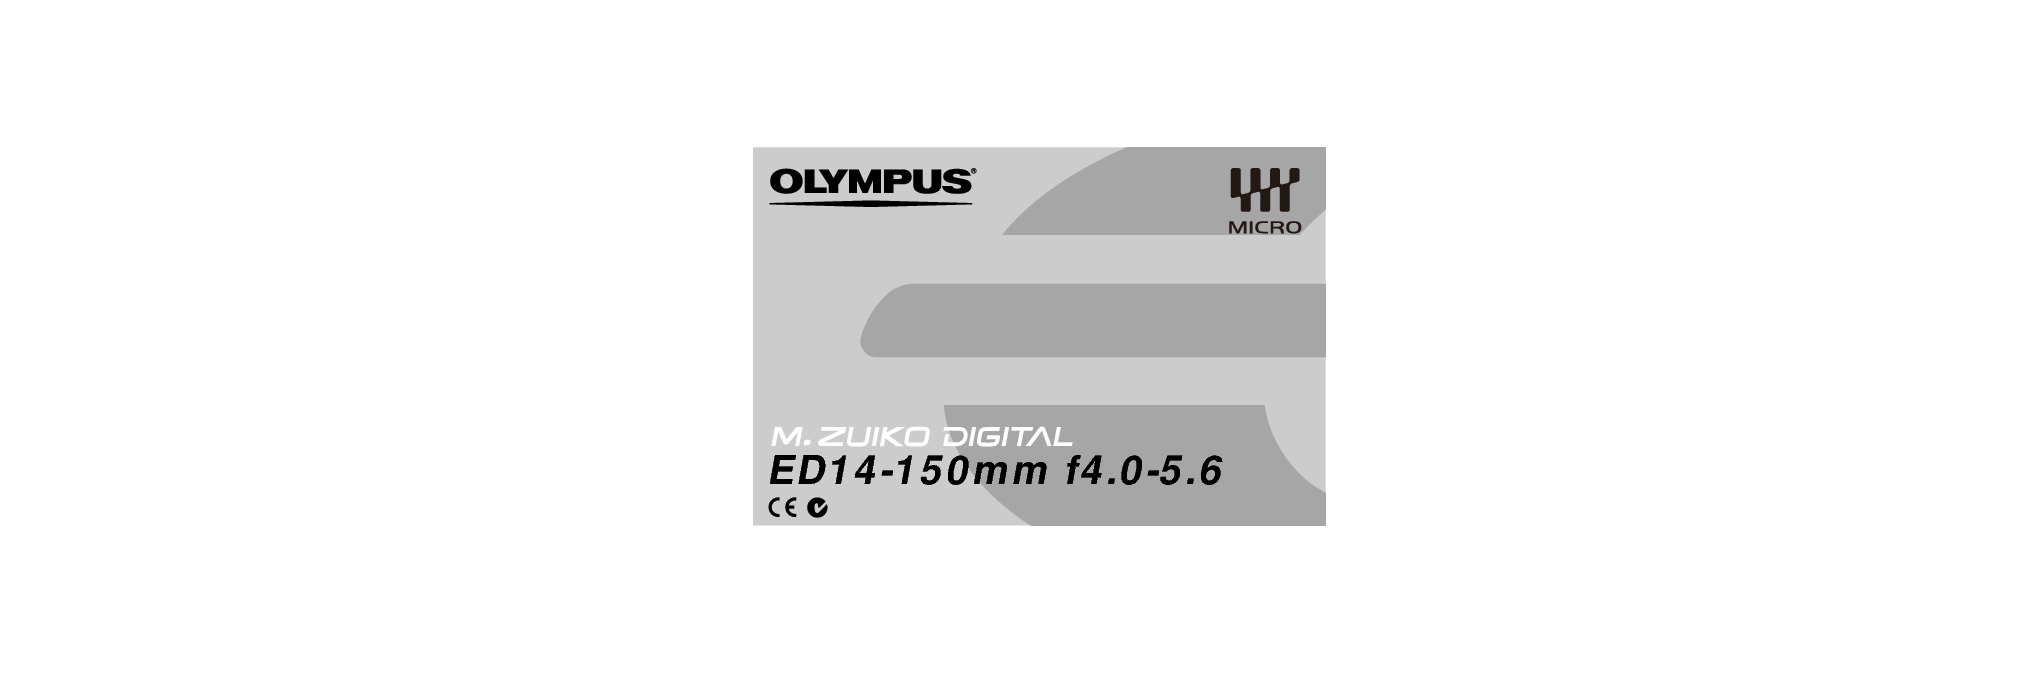 奥林巴斯 Olympus ED 14-150mm f4.0-5.6 使用说明书 封面